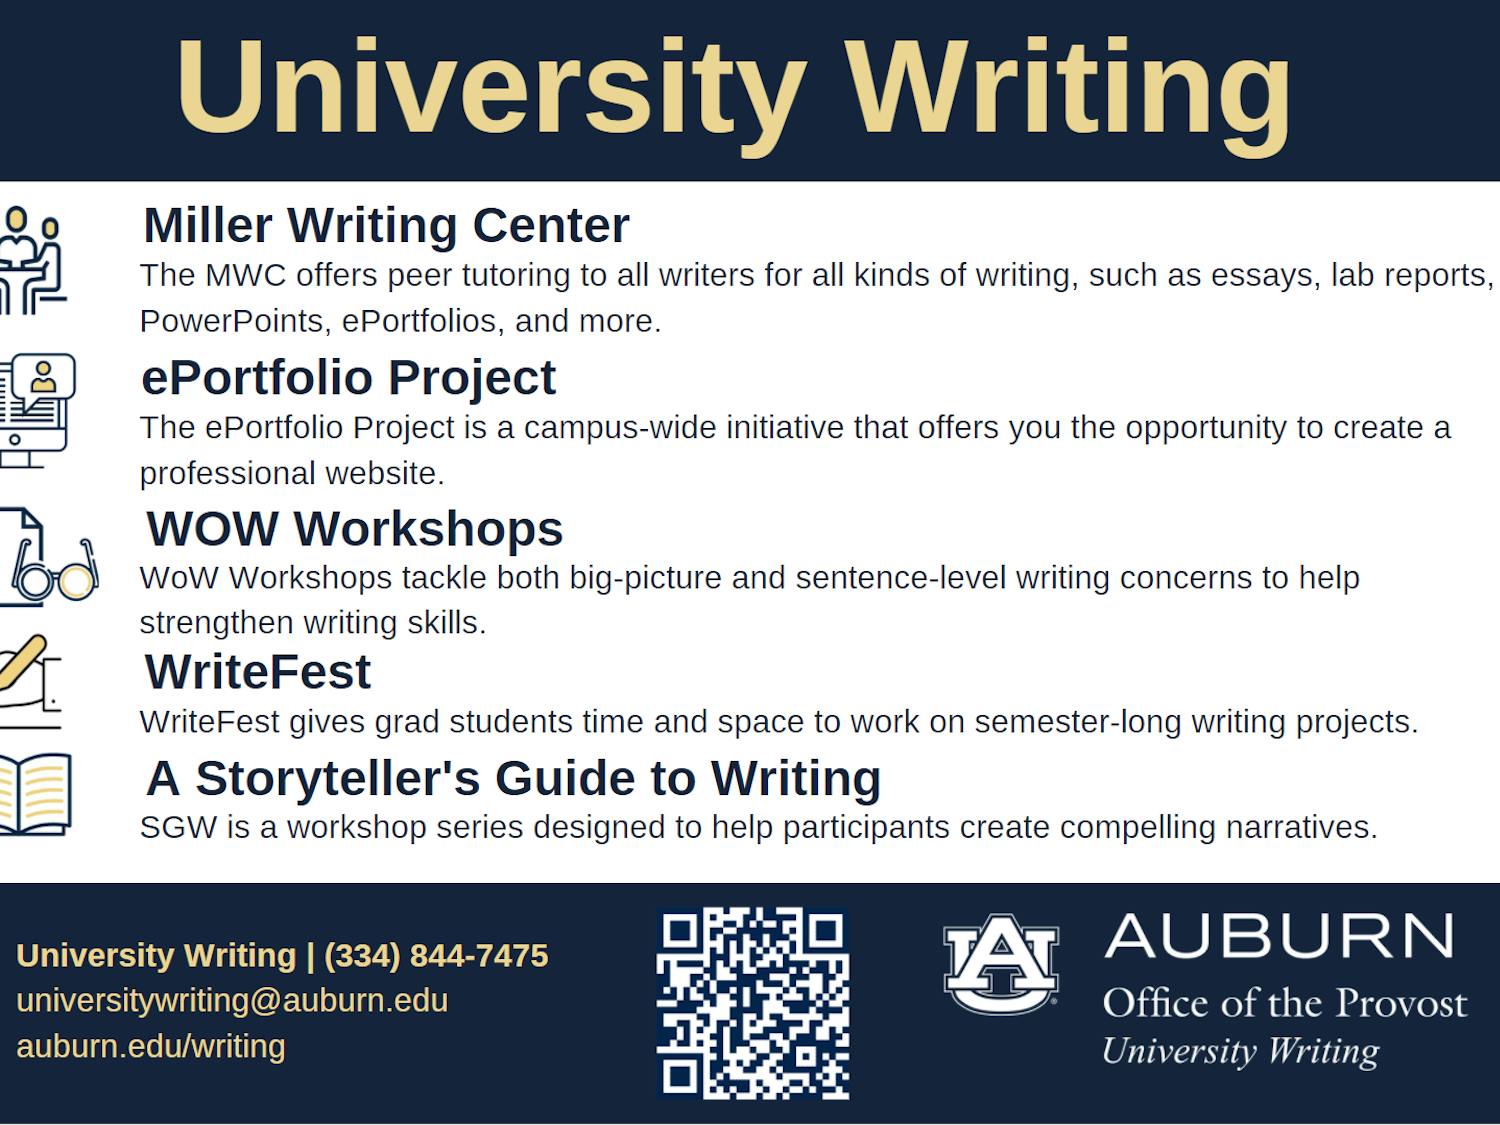 University Writing Poster.png